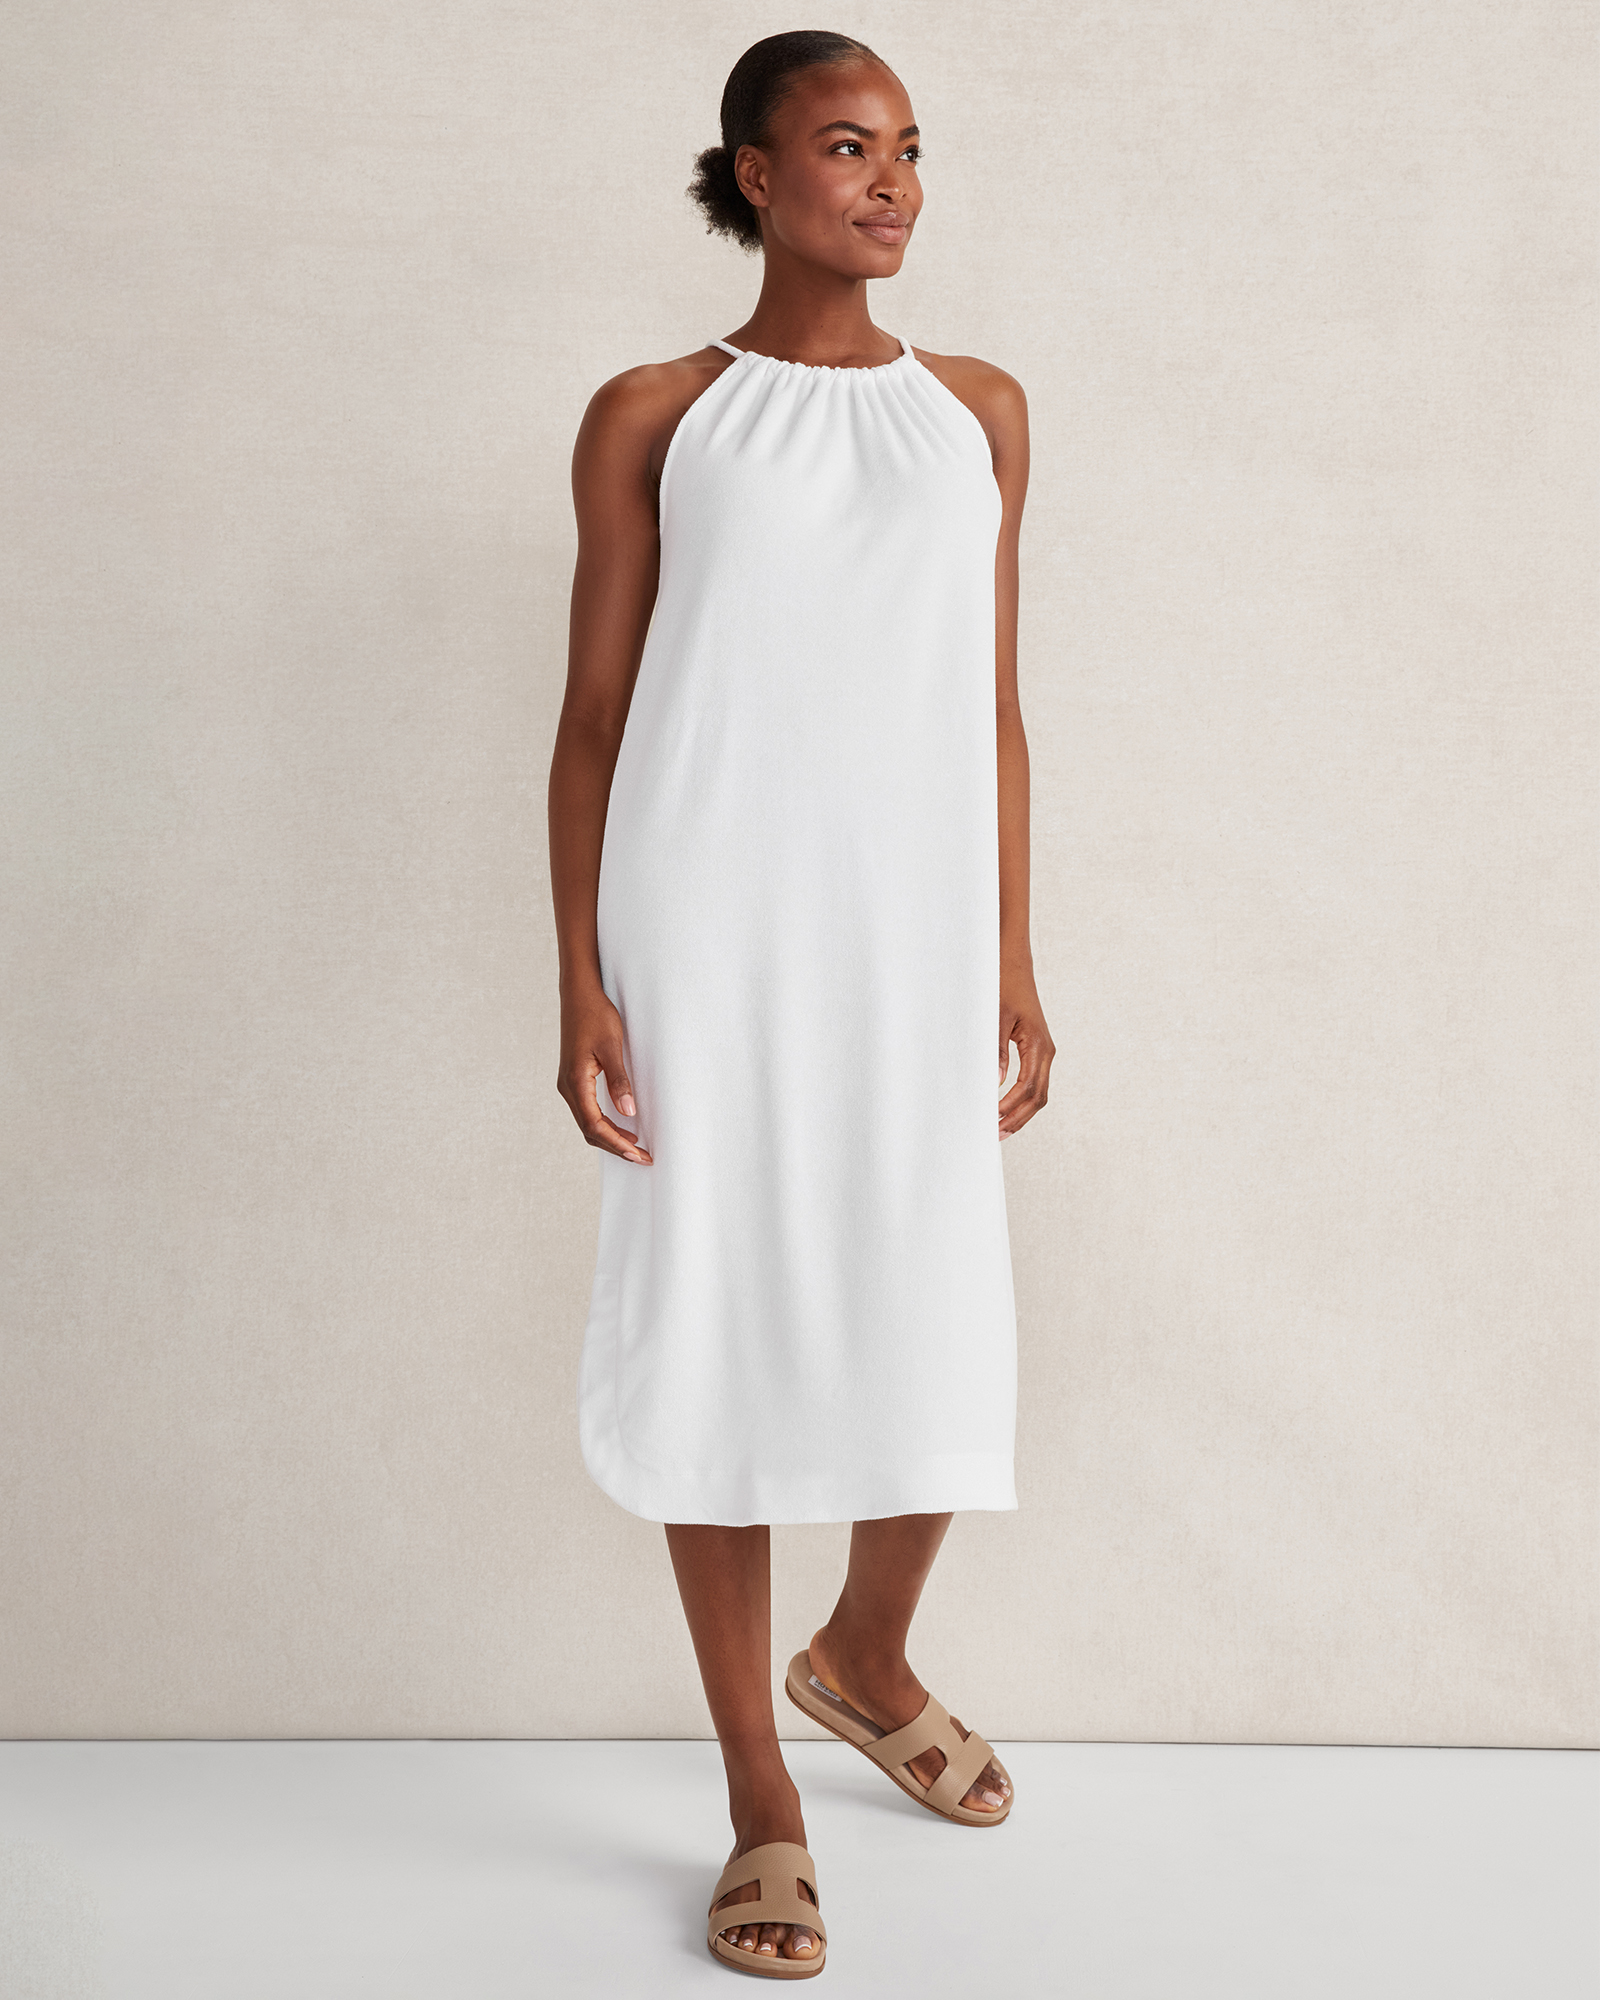 Talbots Terry Cloth Halter Dress - White - Xl